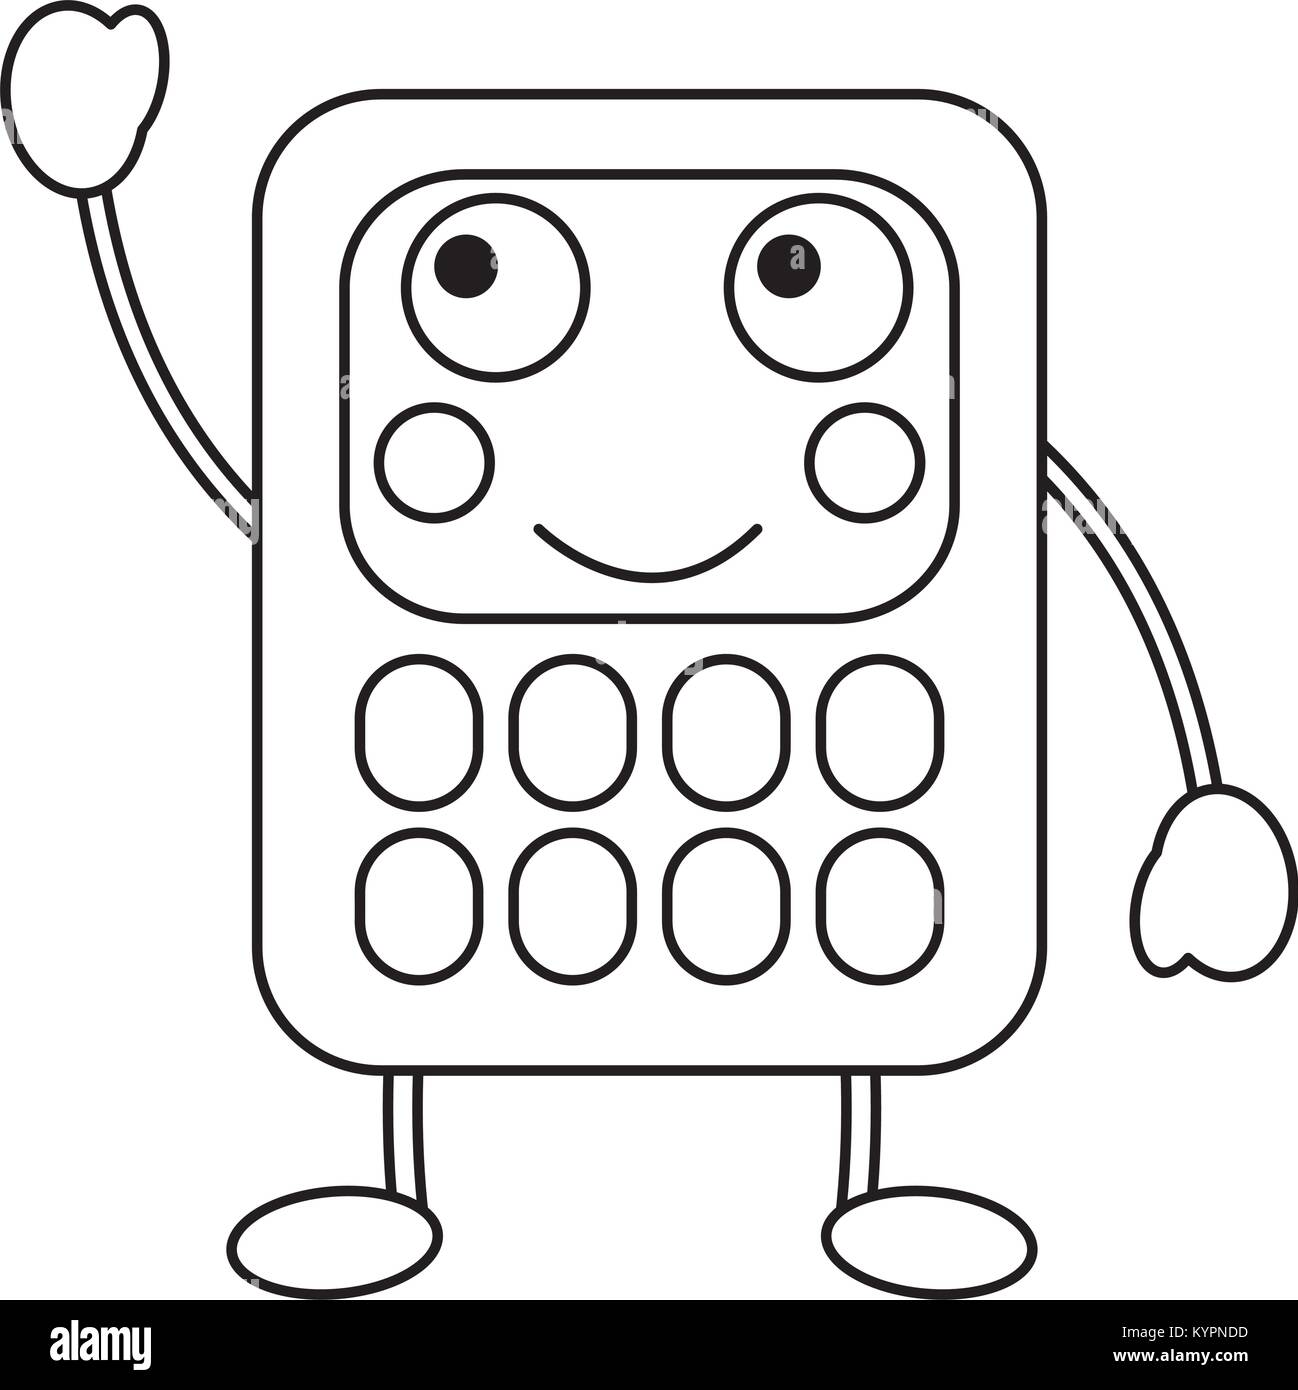 Calculatrices scolaires kawaii cartoon character Illustration de Vecteur